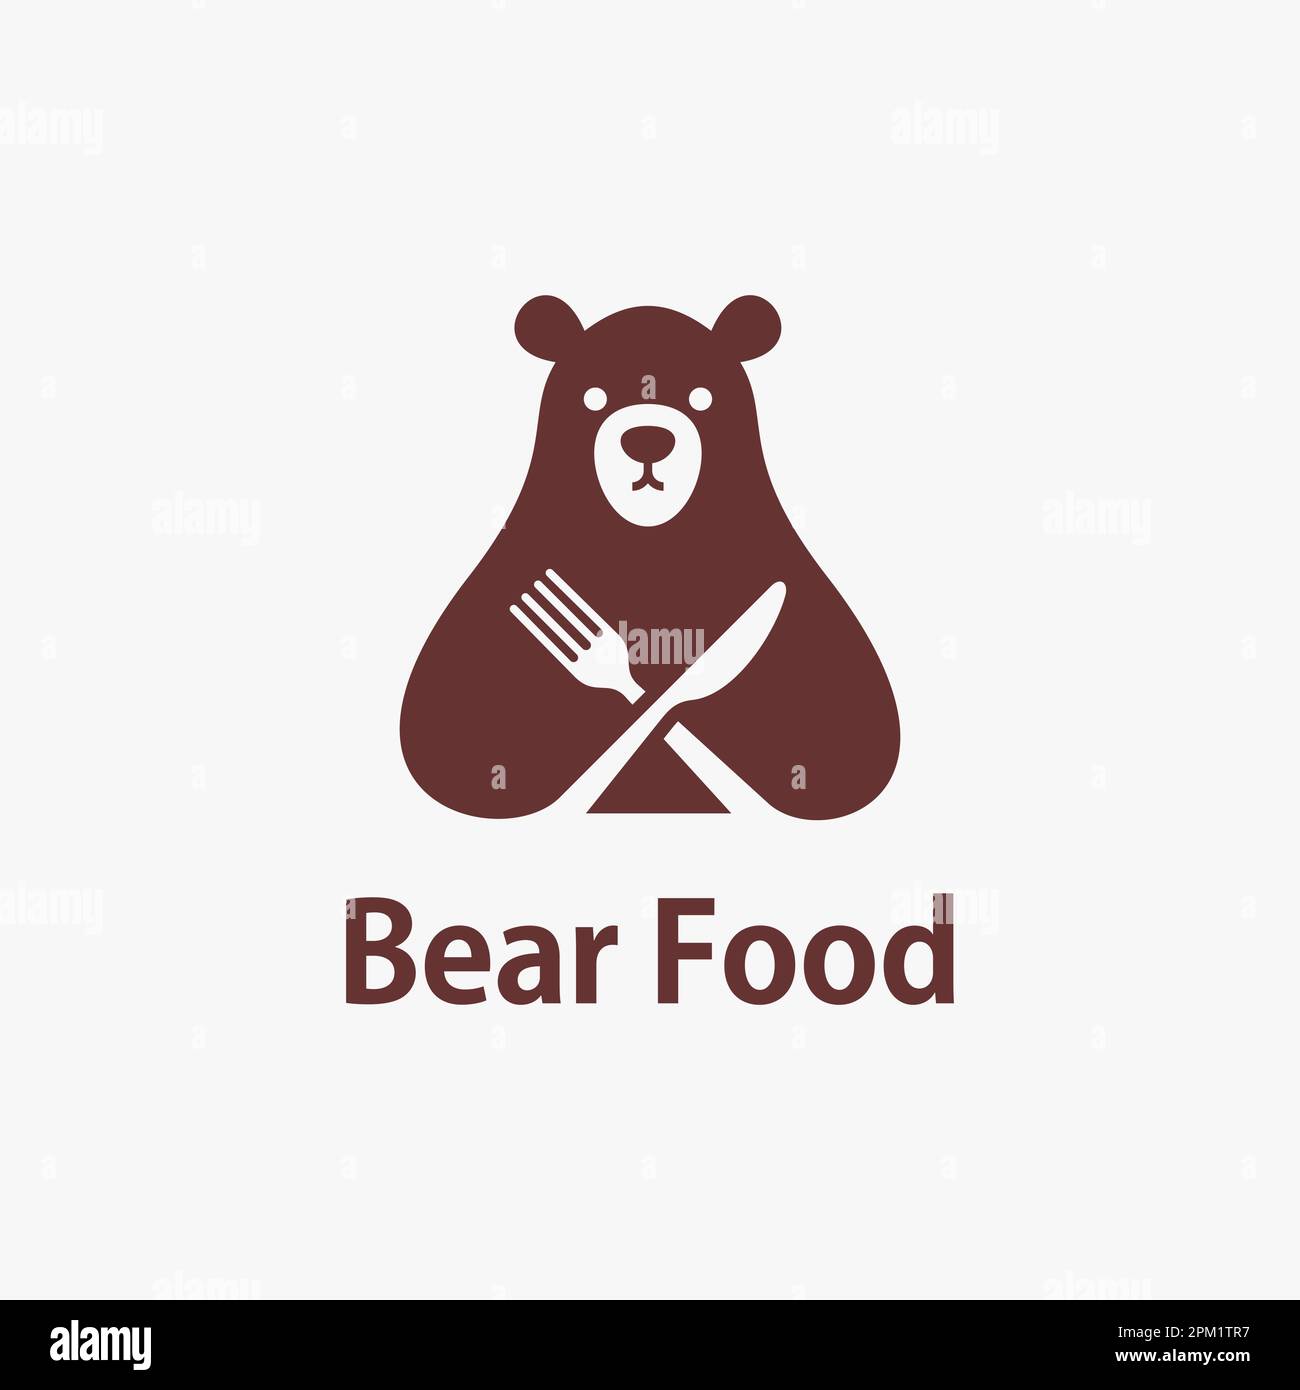 Bear food logo design Stock Vector